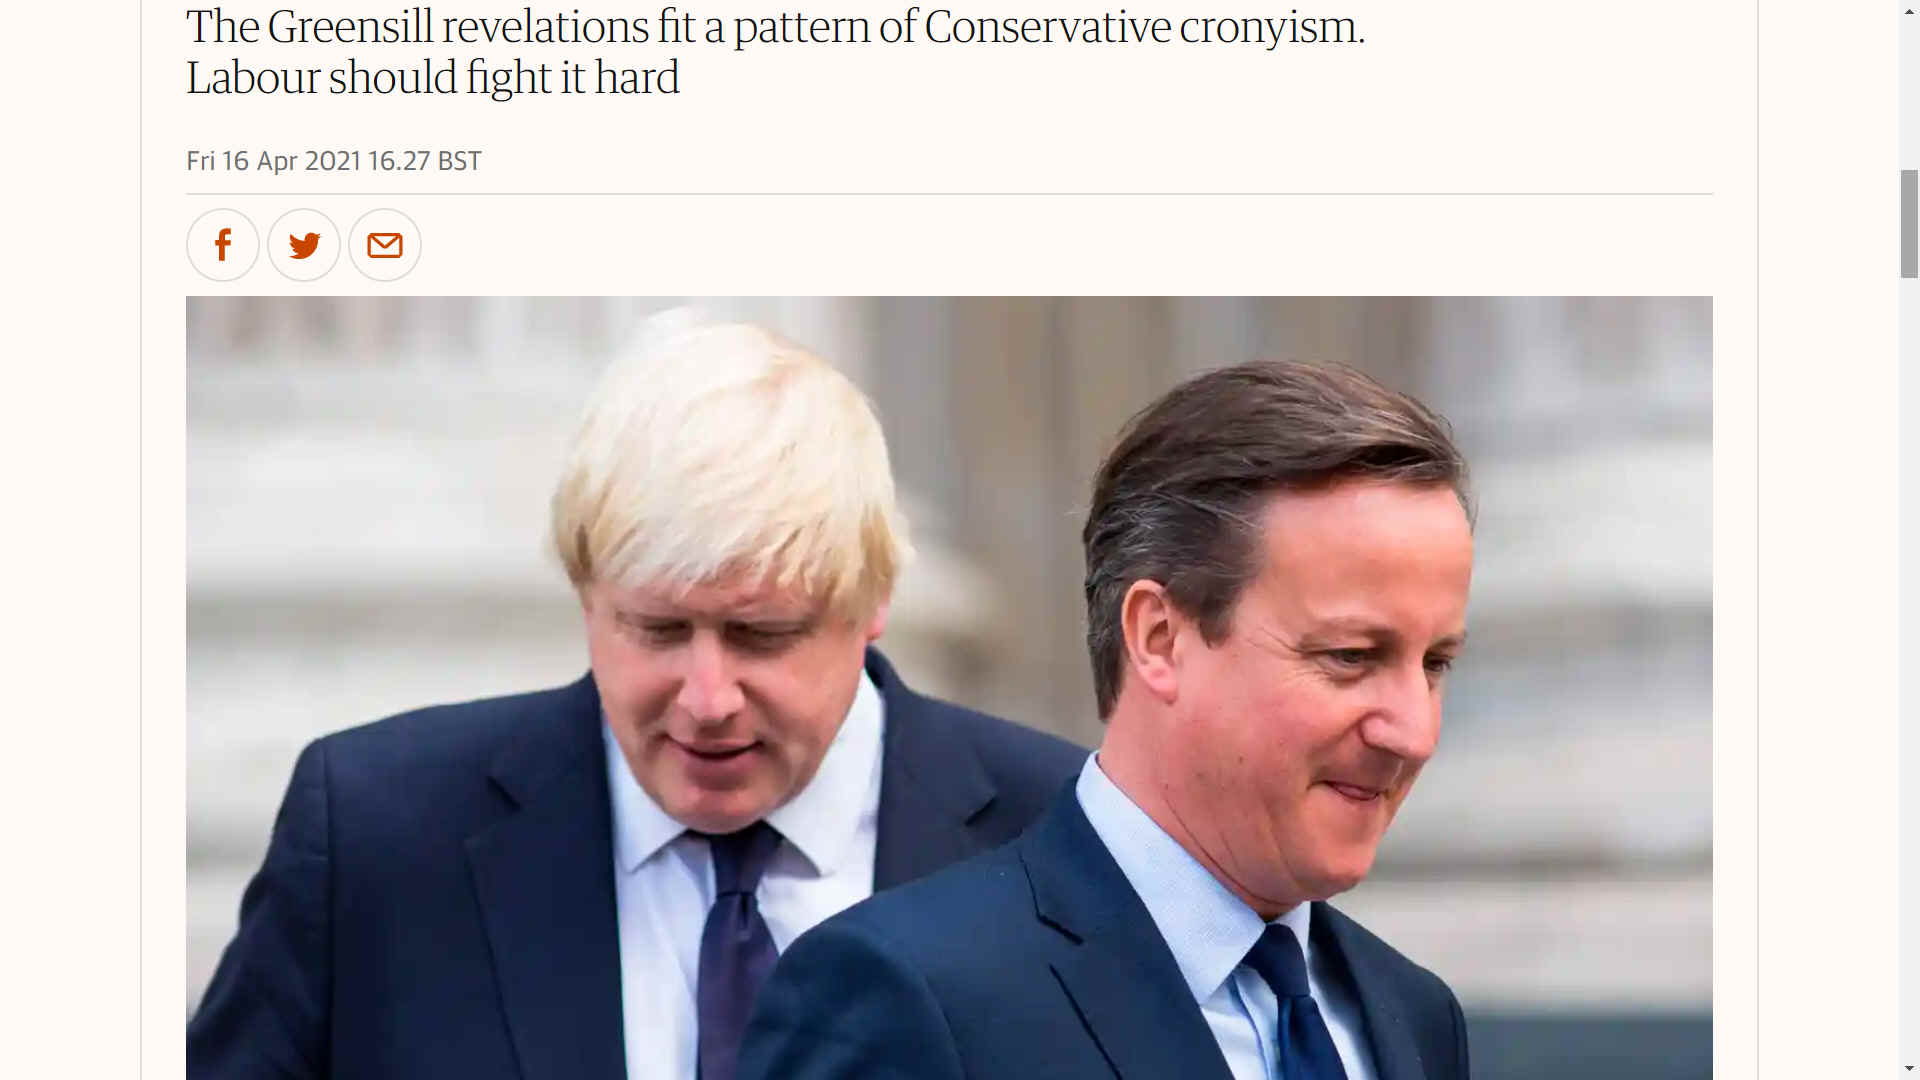 David Cameron and Boris Johnson, cut from the same cloth